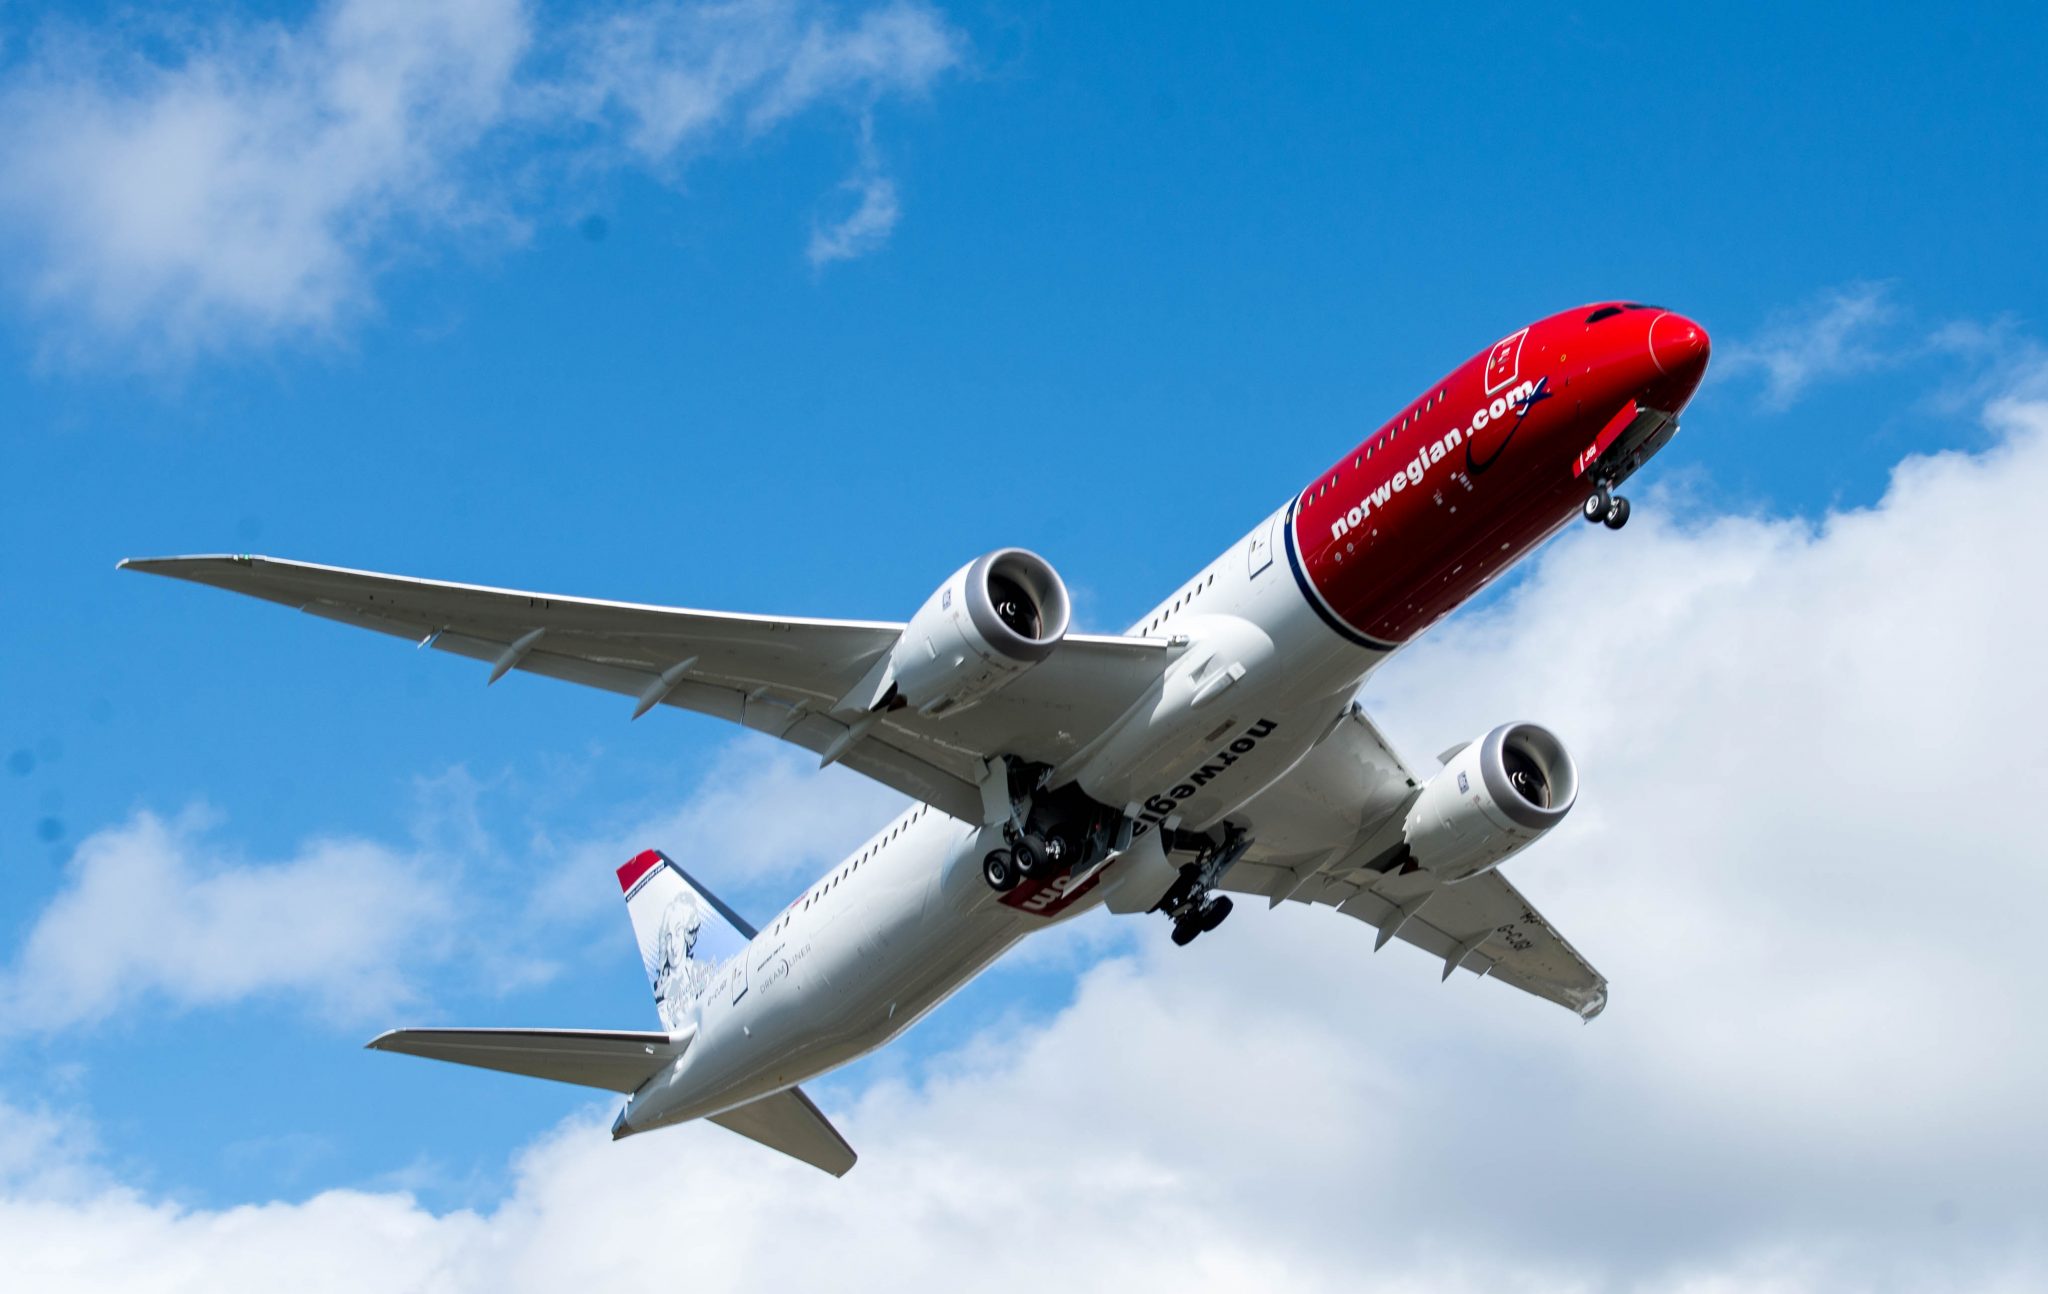 Norwegian Air Shuttle launches NOK 3 billion rights issue